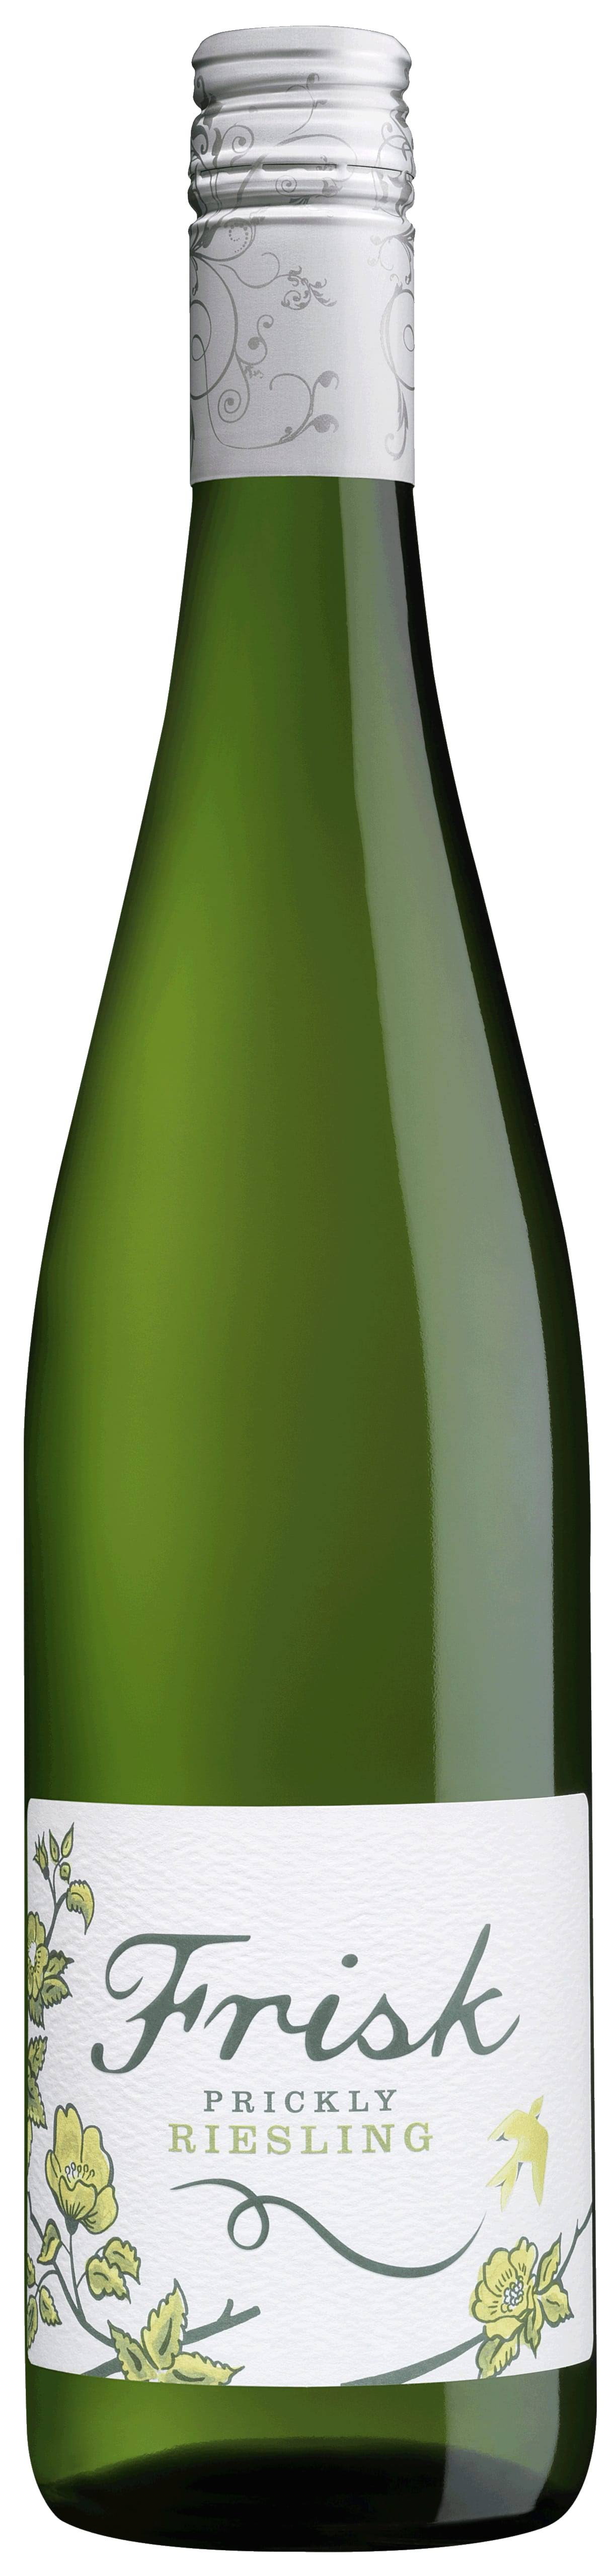 Frisk Prickly Riesling, Victoria (Vintage Varies) - 750 ml bottle